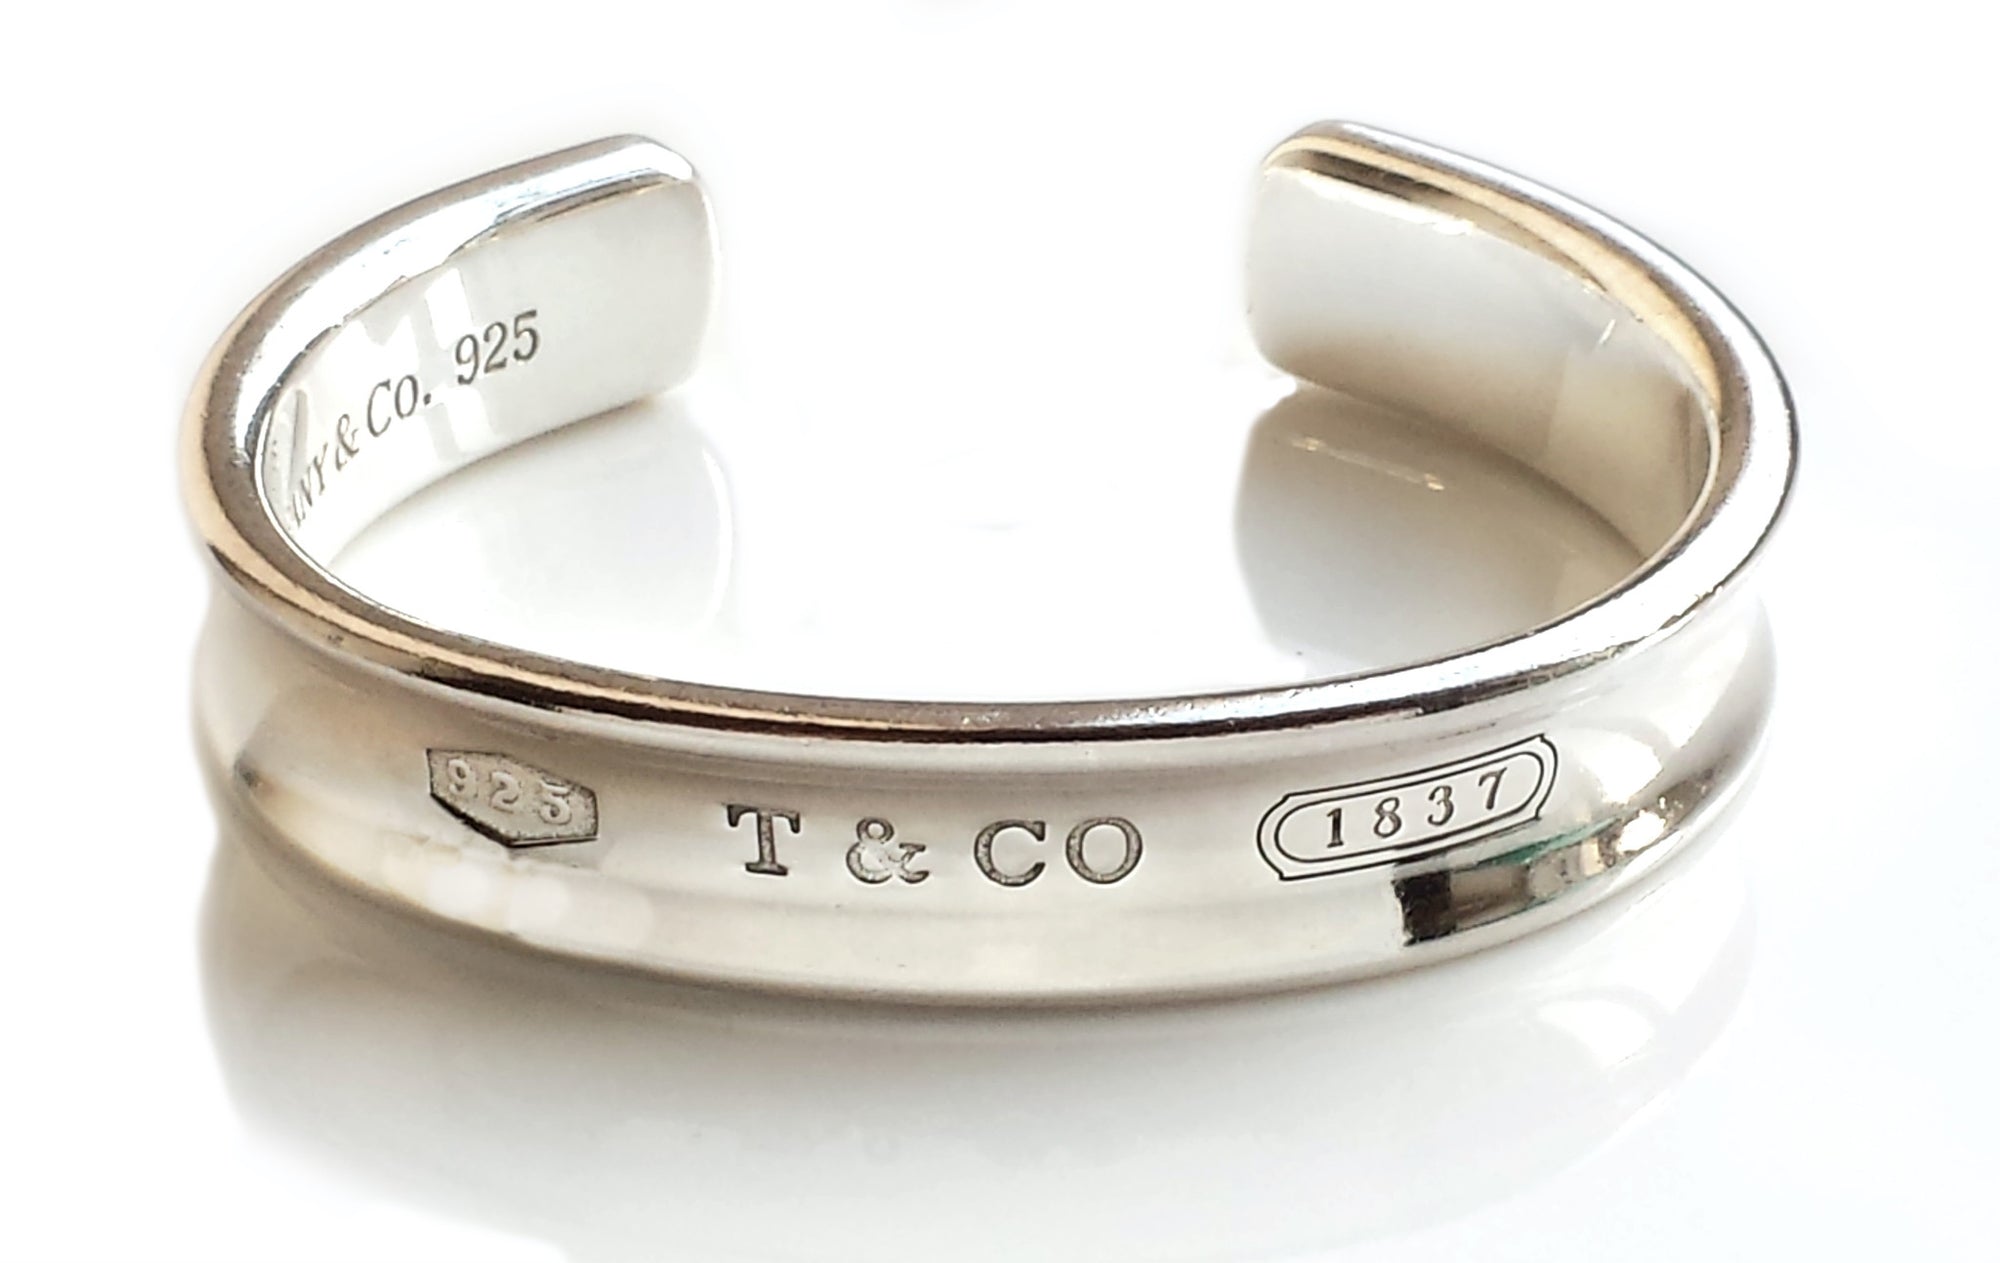 Tiffany & Co 1837 Sterling Silver Bangle Bracelet Small + Pouch